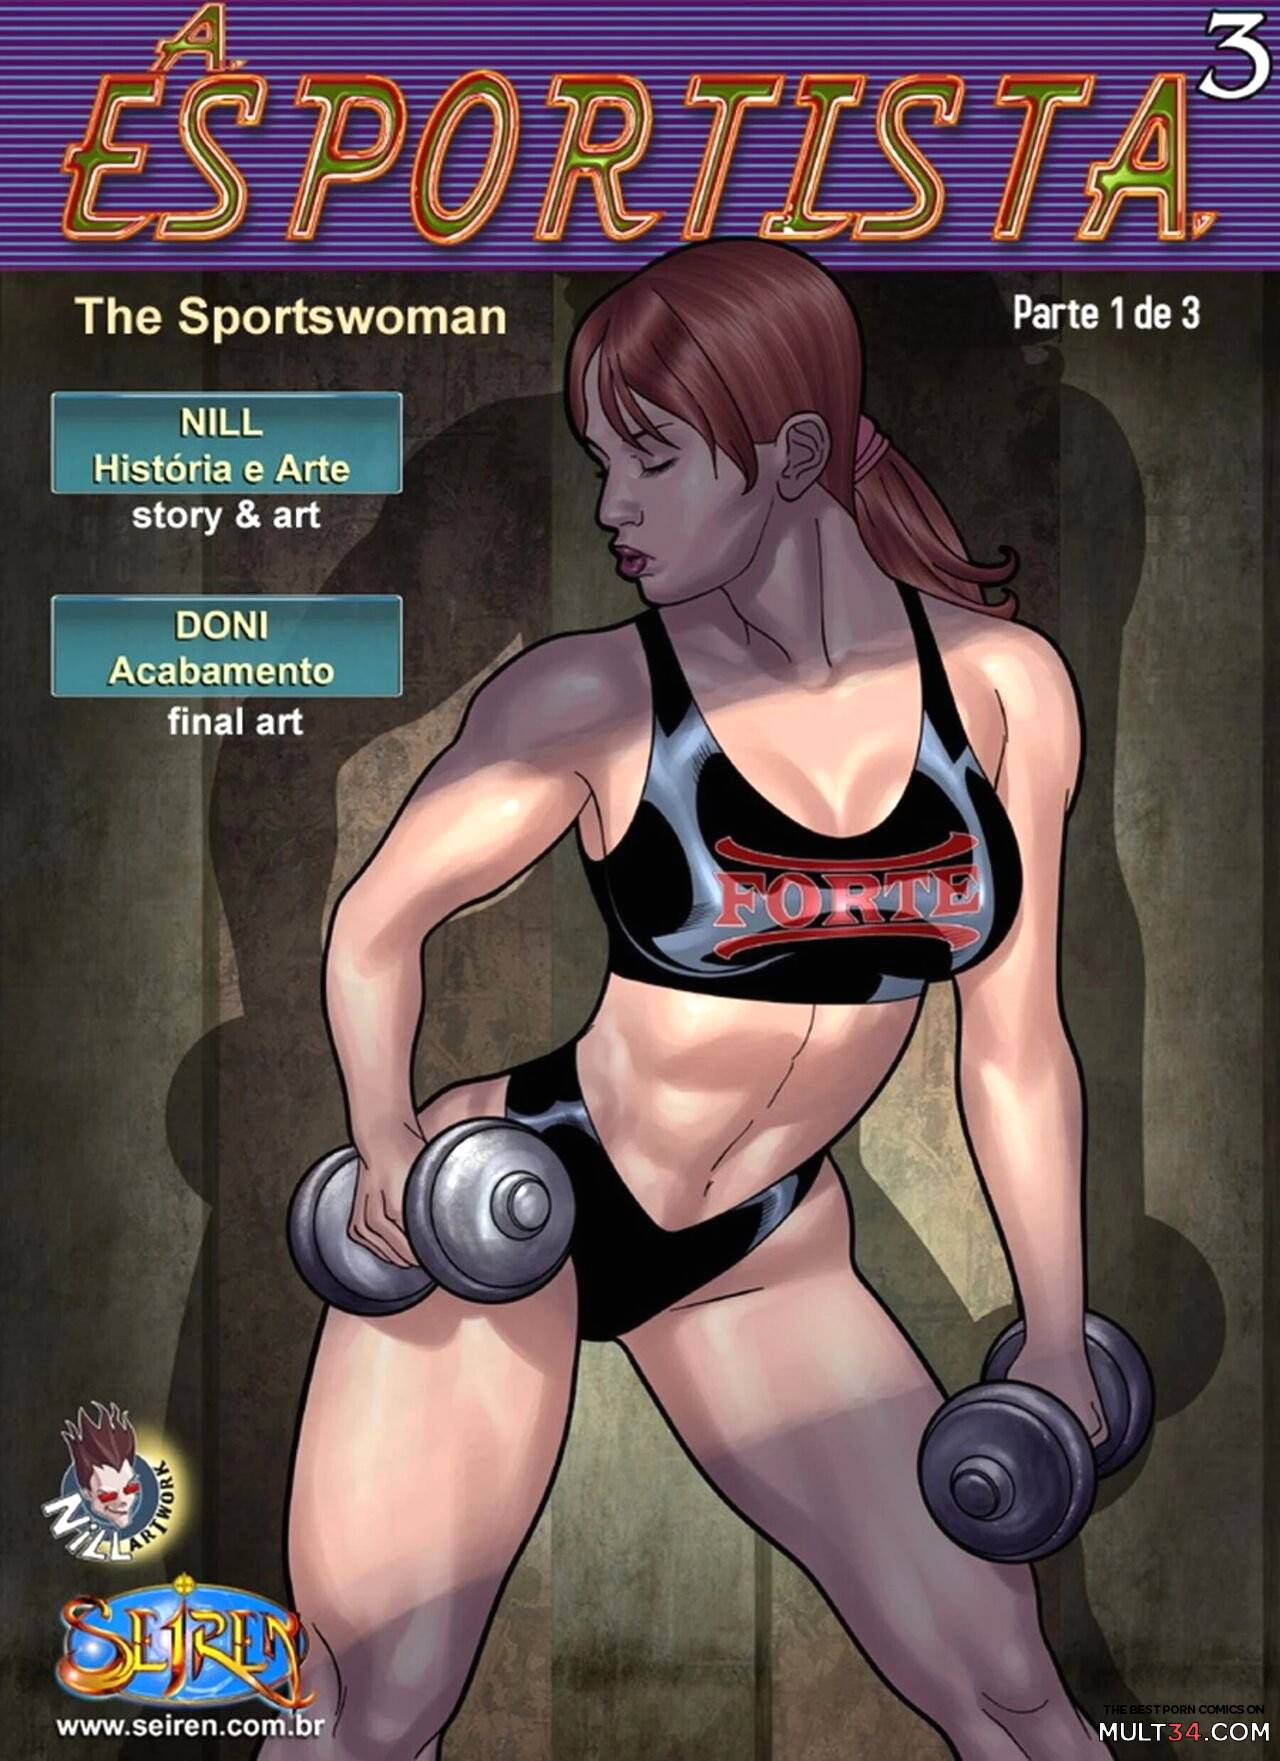 The Sportswoman 3 page 1